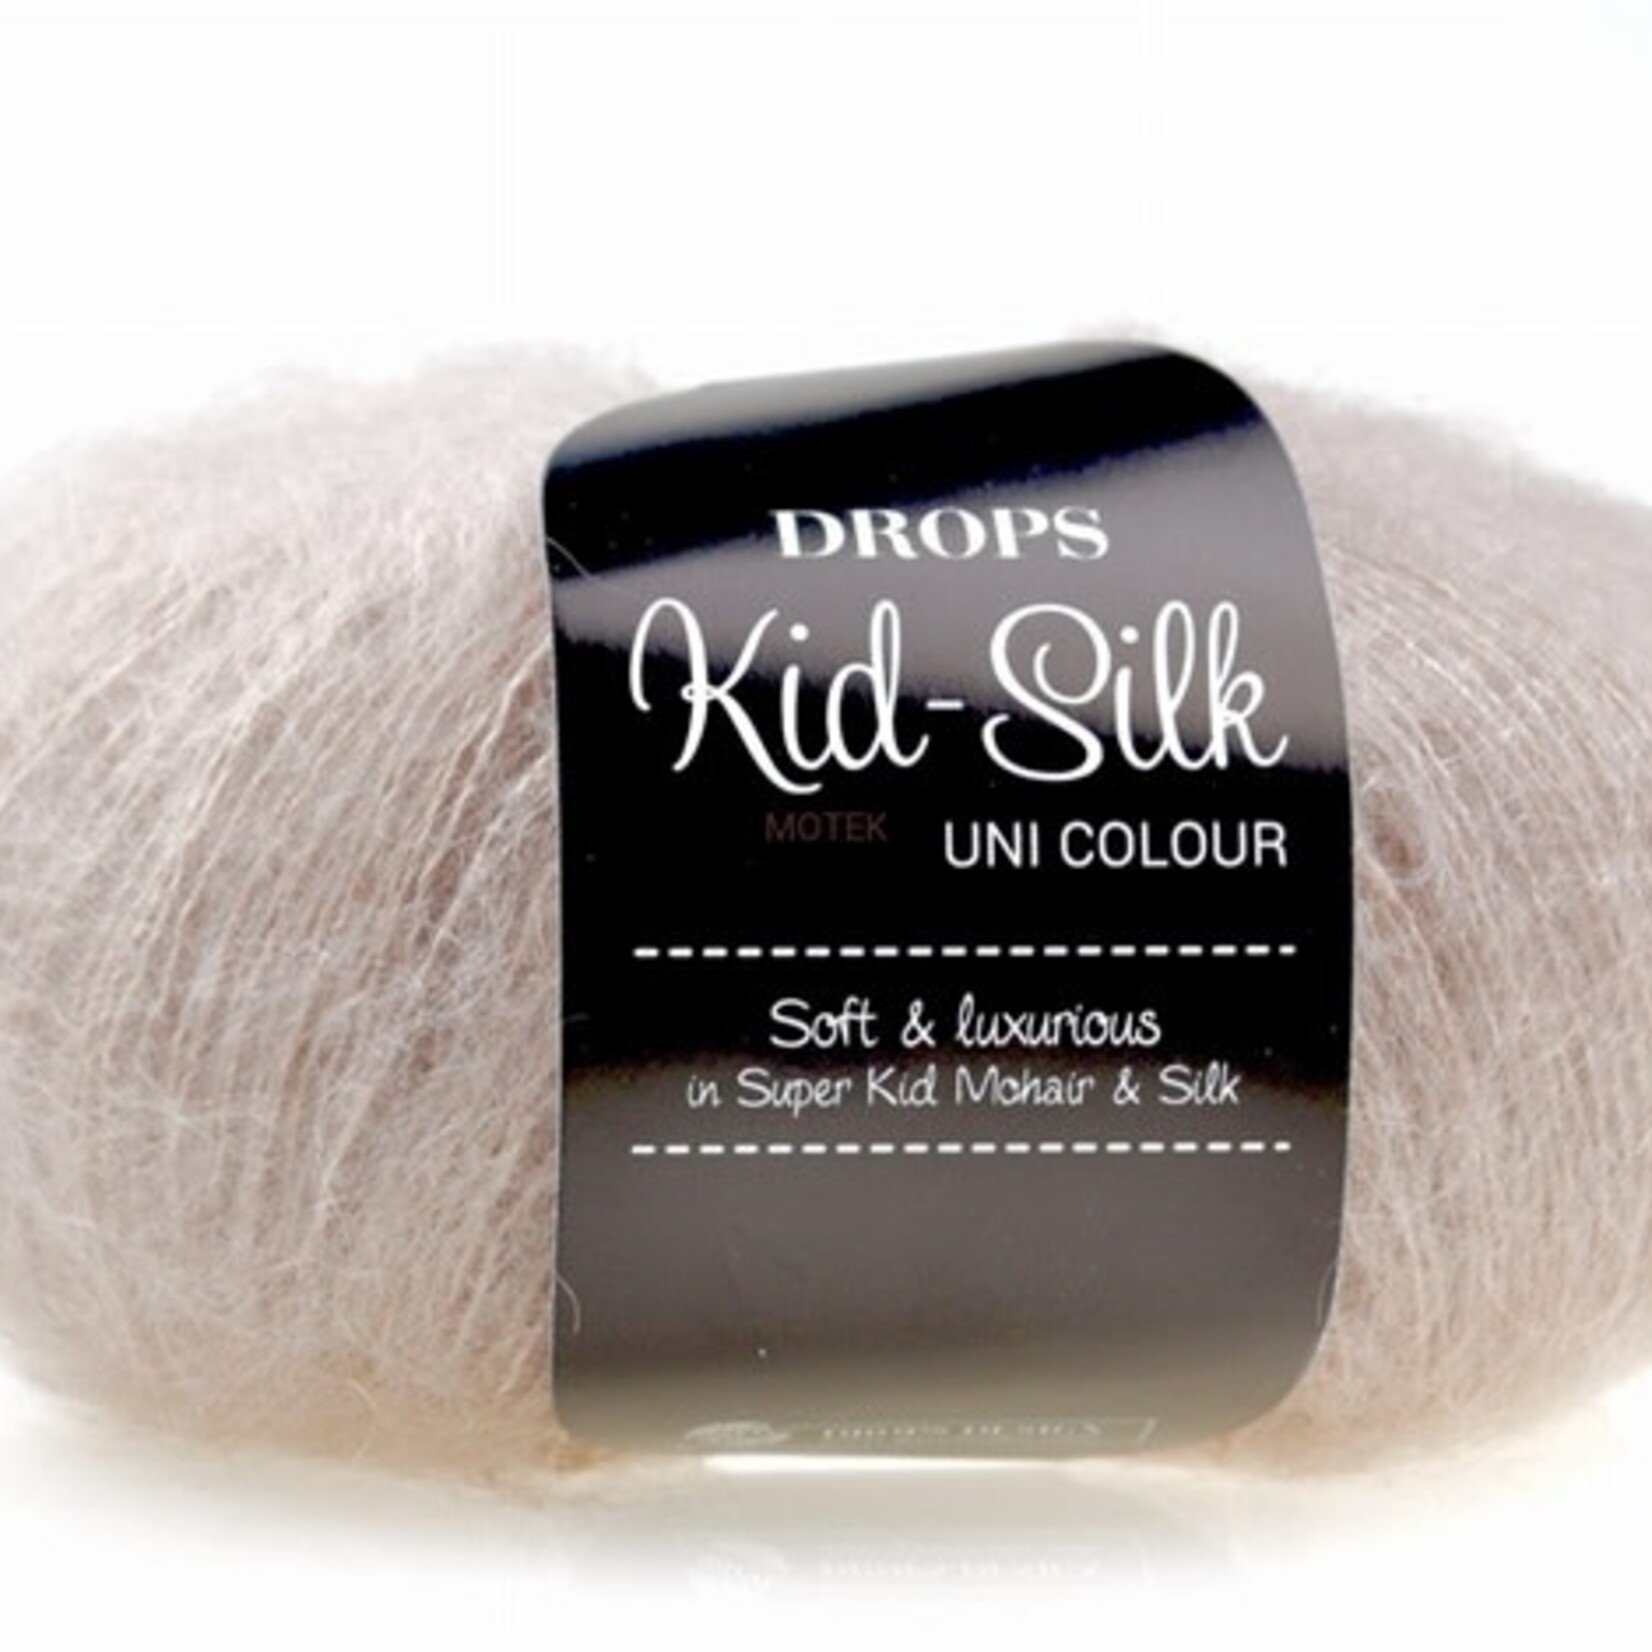 Drops Kid Silk Uni Colour by Drops